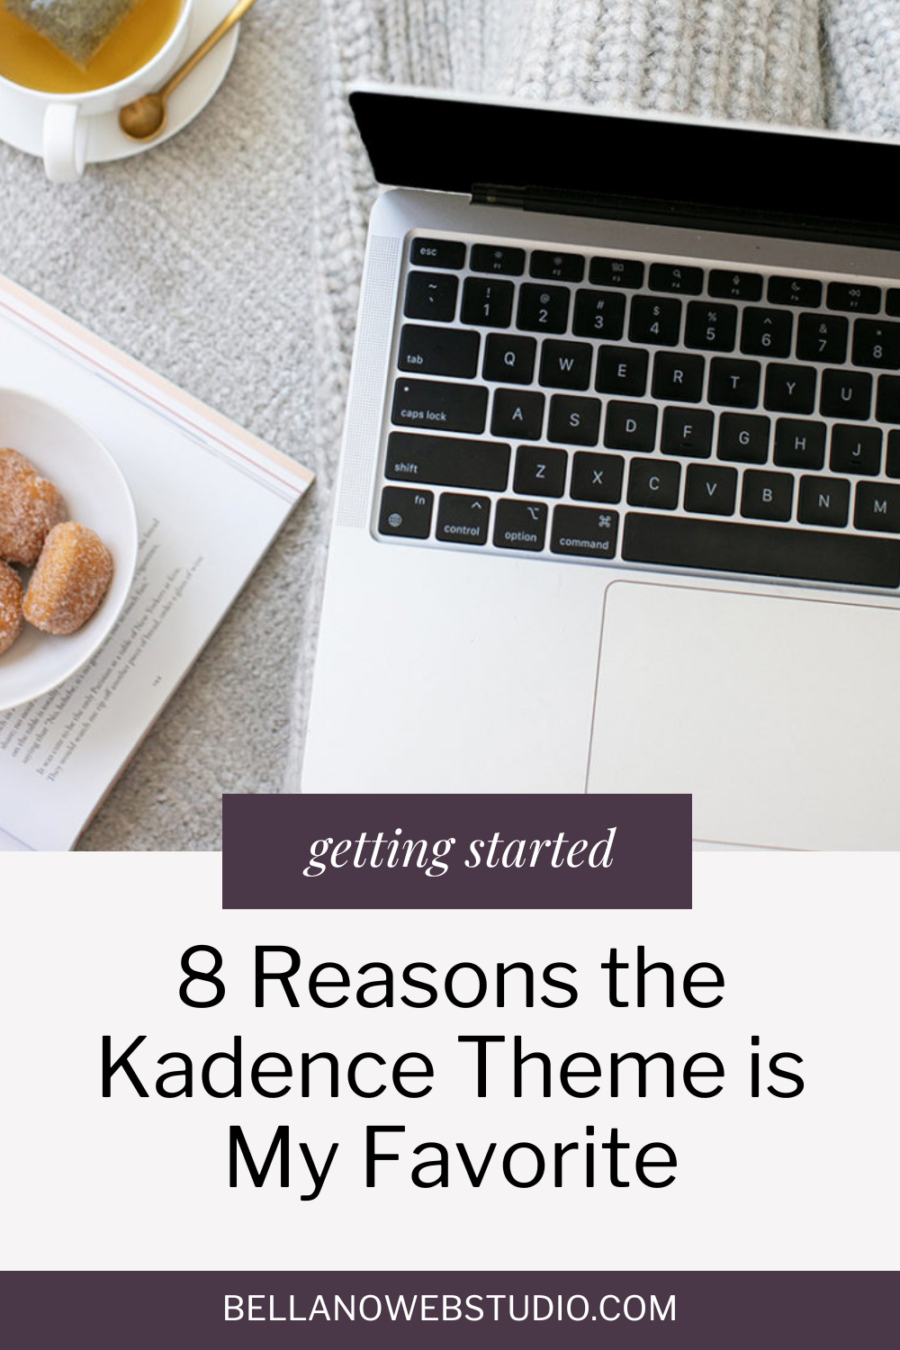 8 Reasons the Kadence Theme is my Favorite